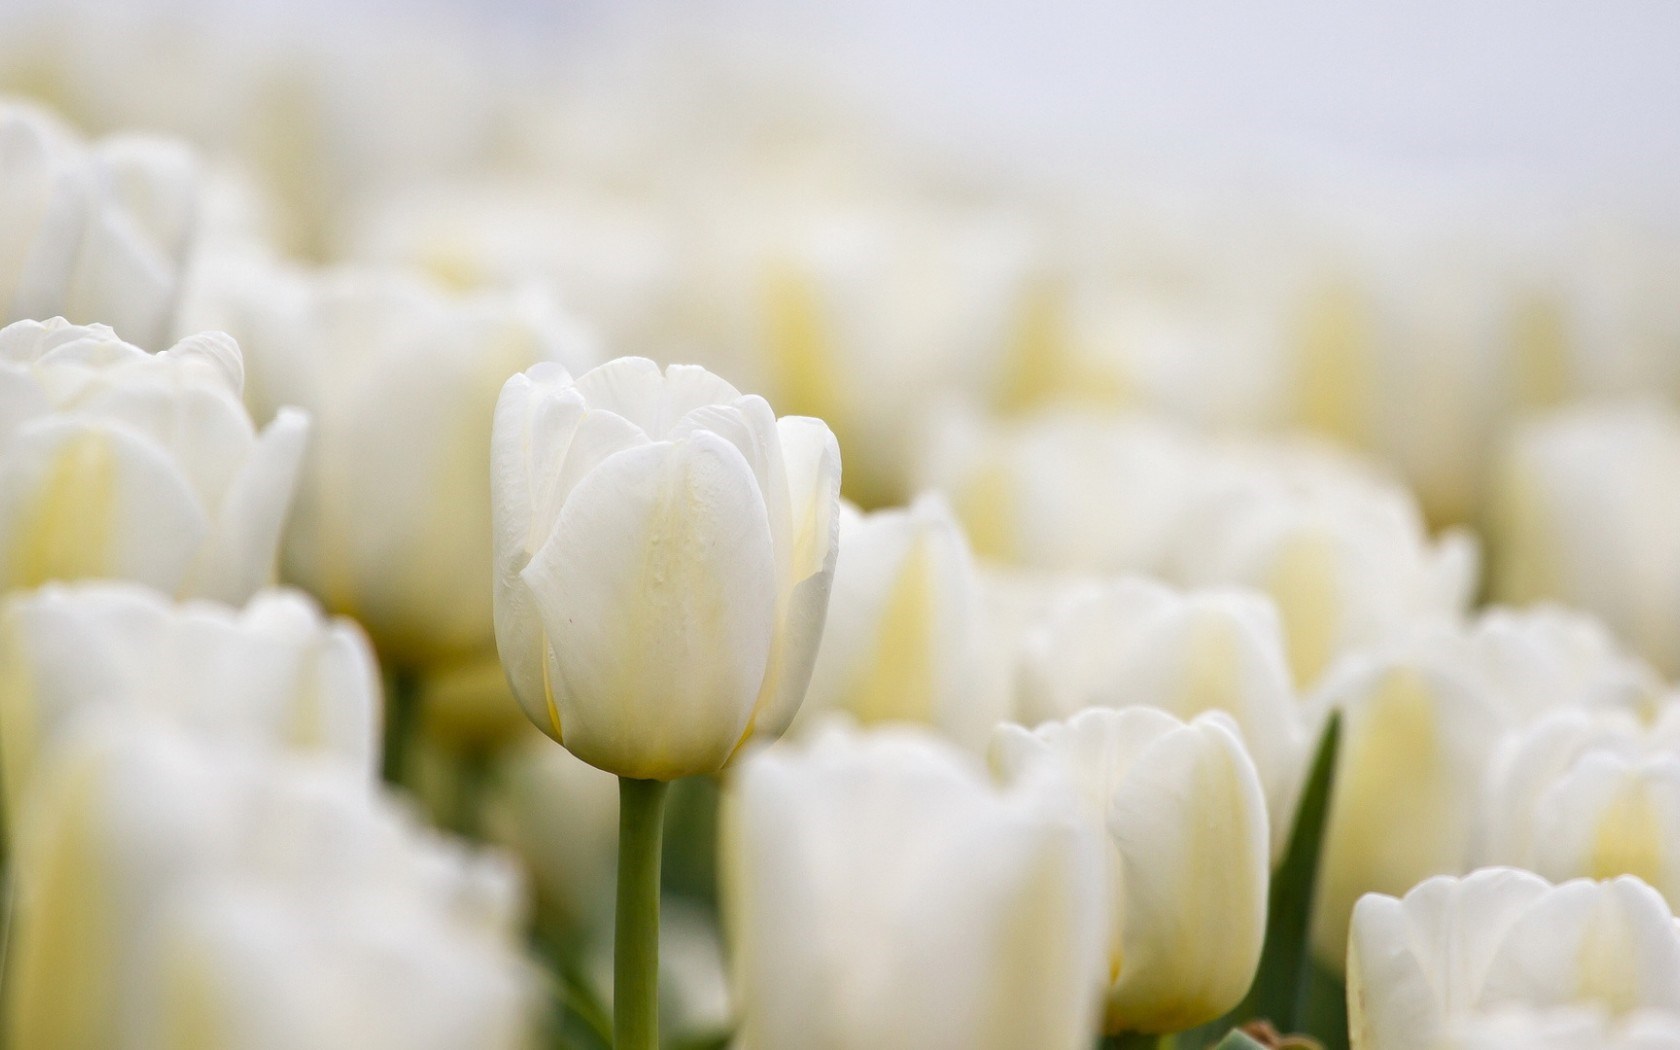 [46+] White Tulips Wallpaper | WallpaperSafari.com